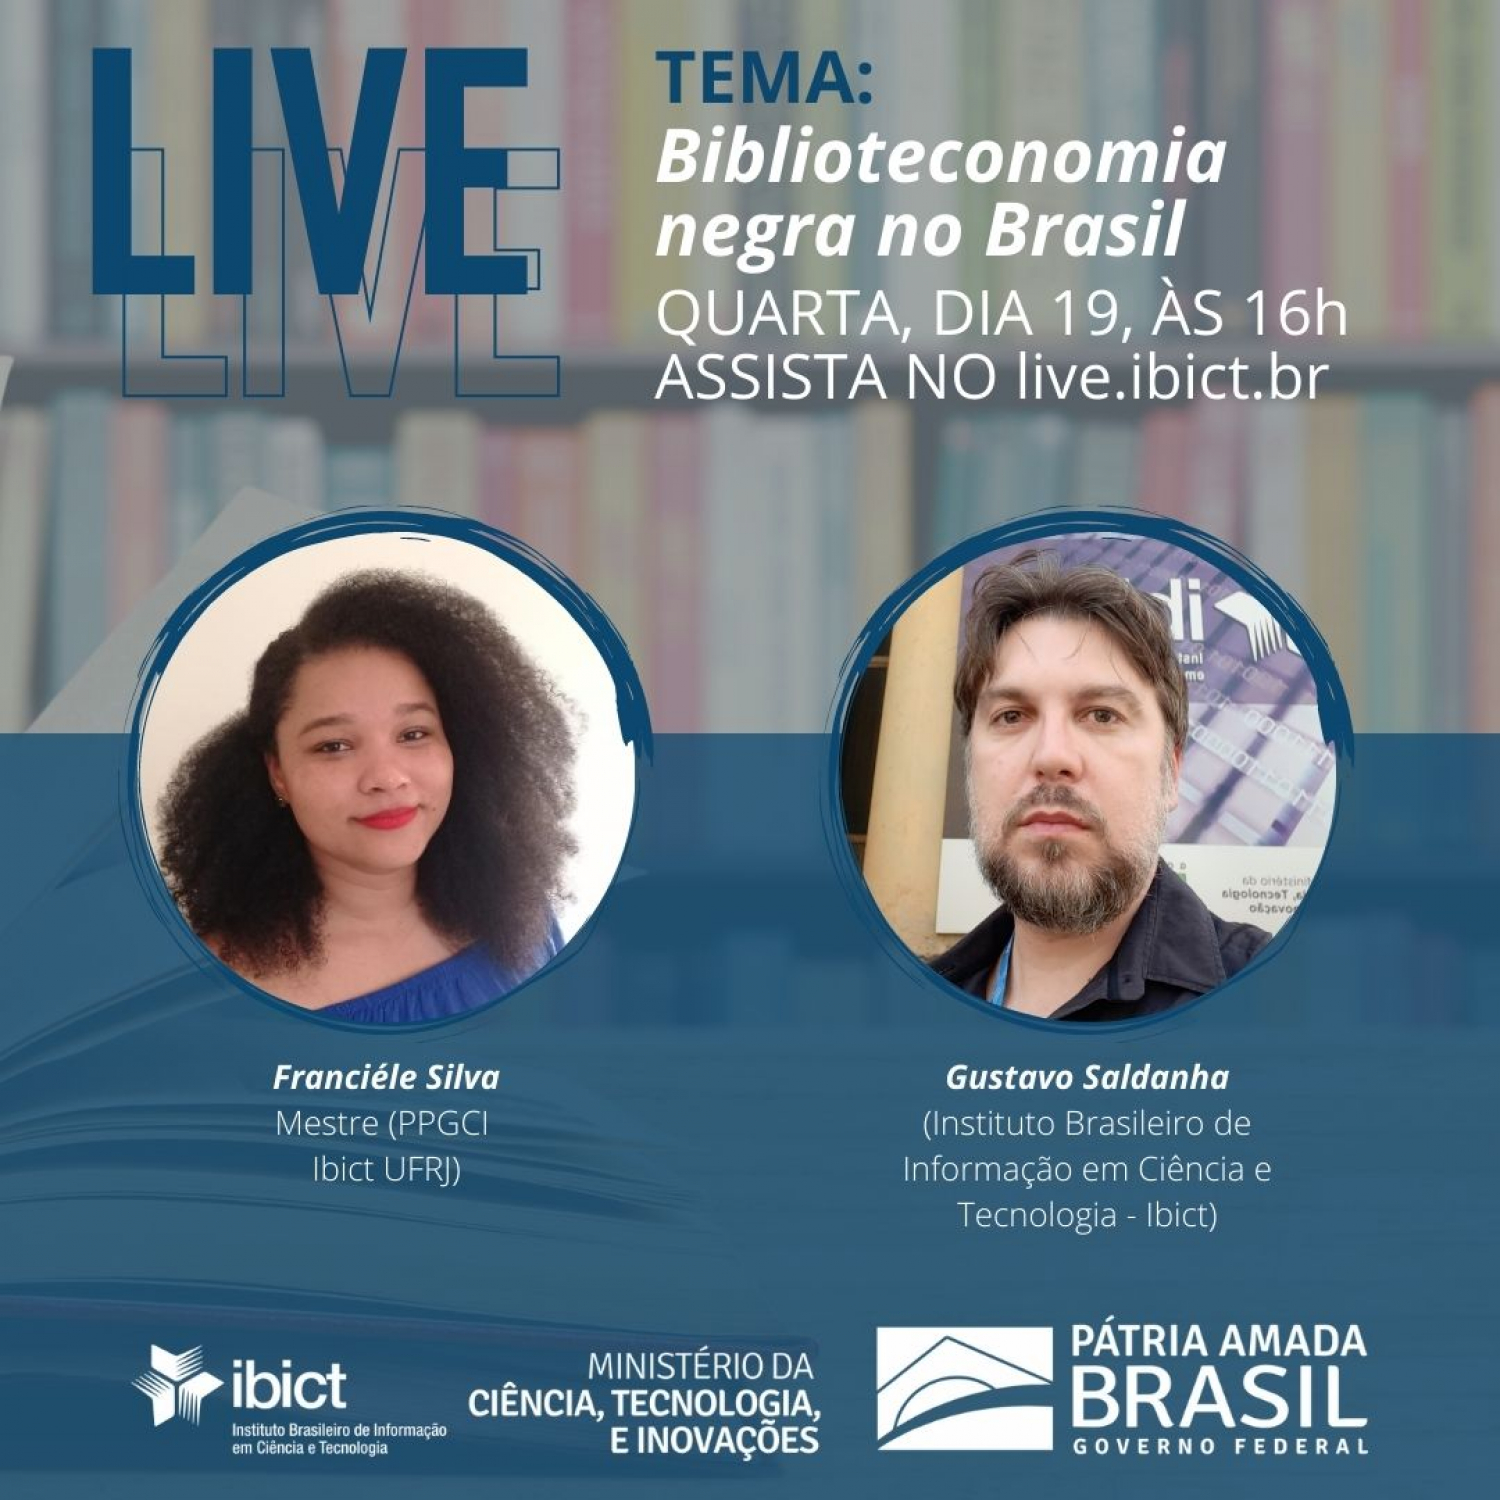 Ciclo de Conferências Brasil: Poéticas da diáspora africana (DÍA 4)  O  Programa de Leitorado Brasileiro na Colômbia e a Cátedra Libre de Estudios  Brasileños da Universidad de Buenos Aires, com a